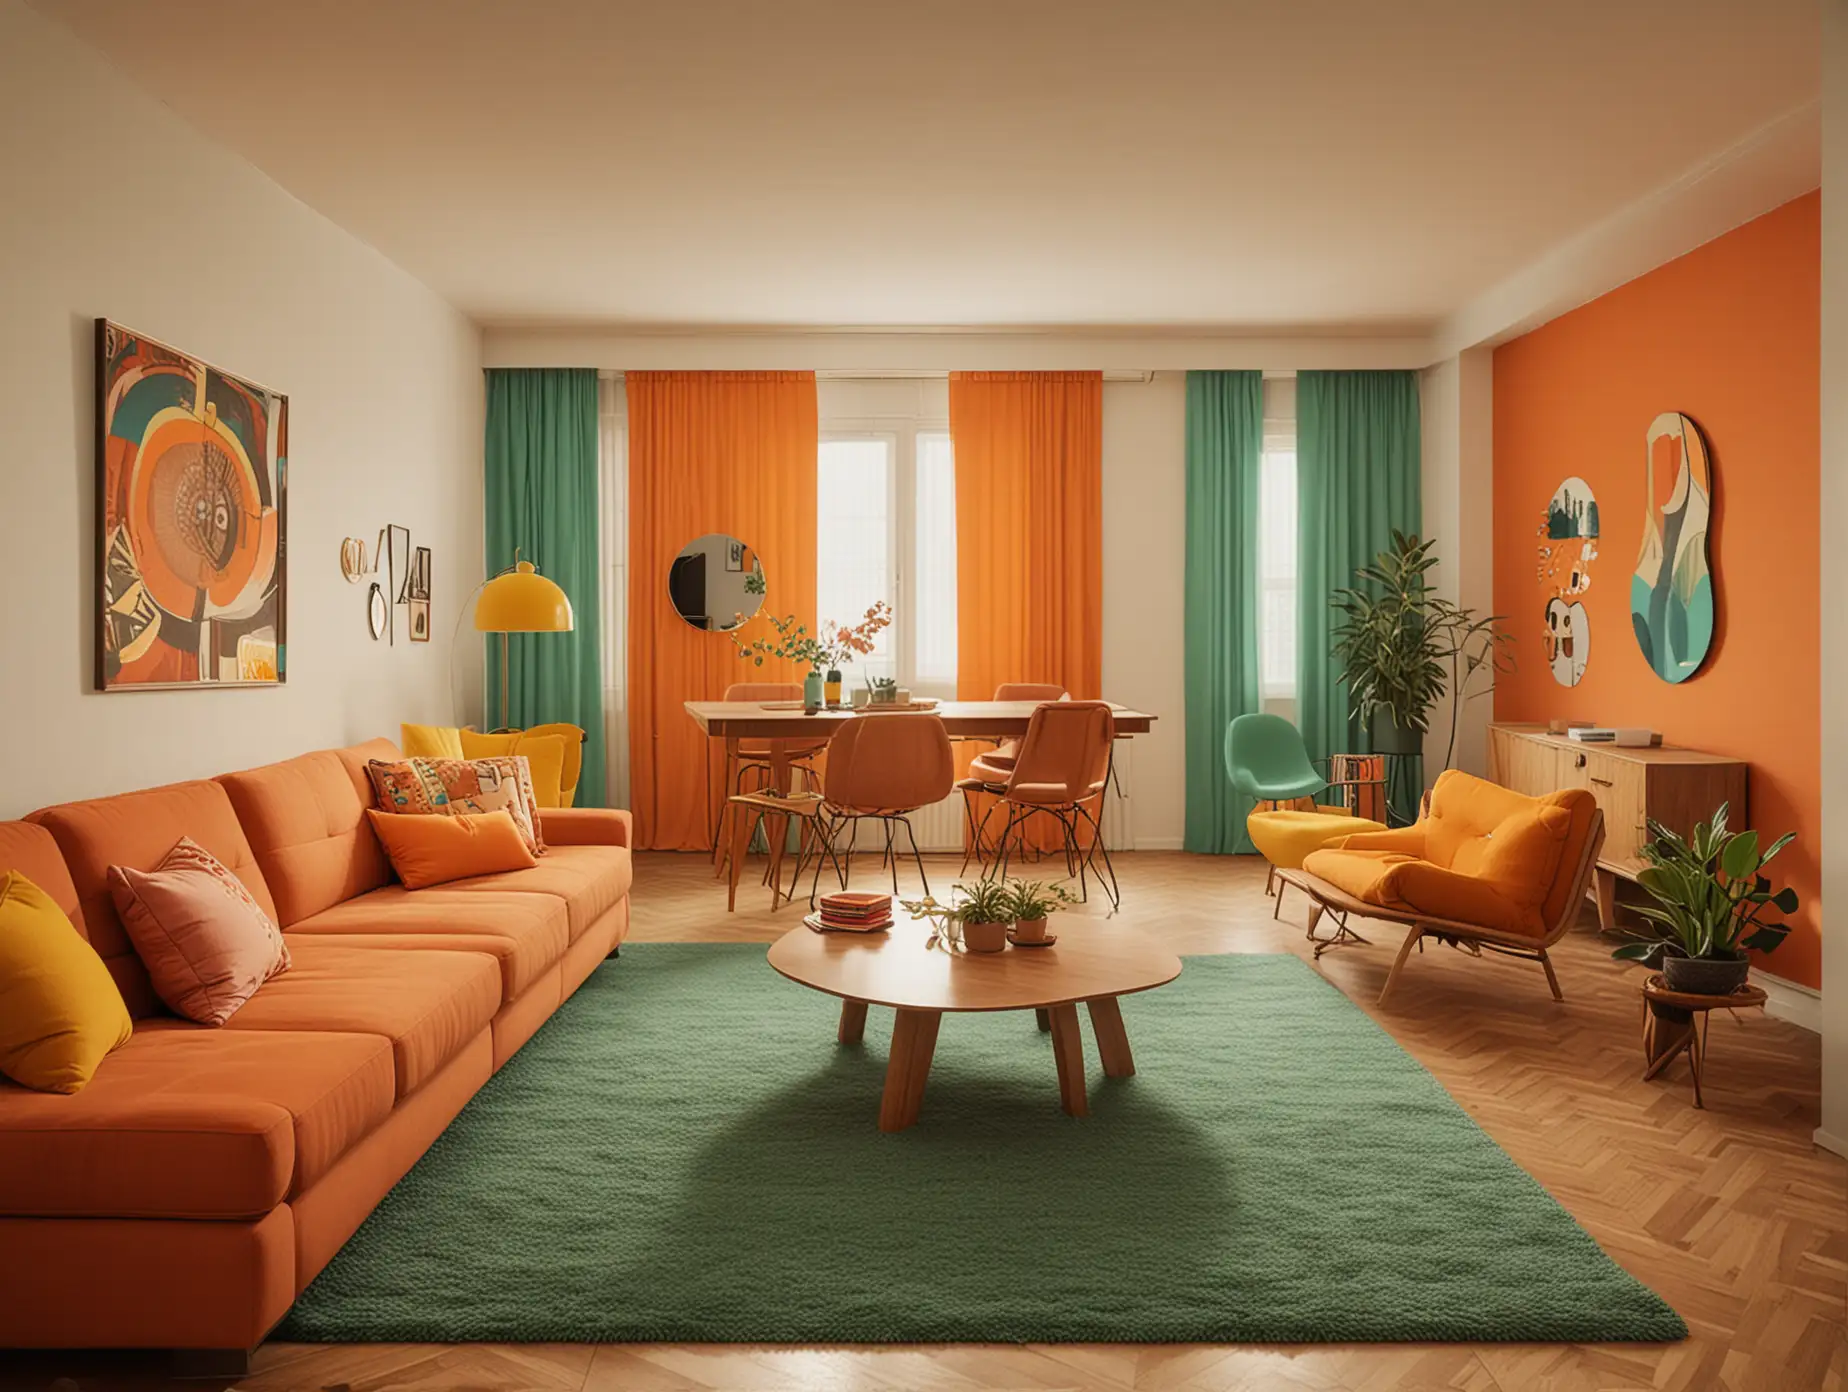 Retro 70s Apartment Design with Vibrant Colors